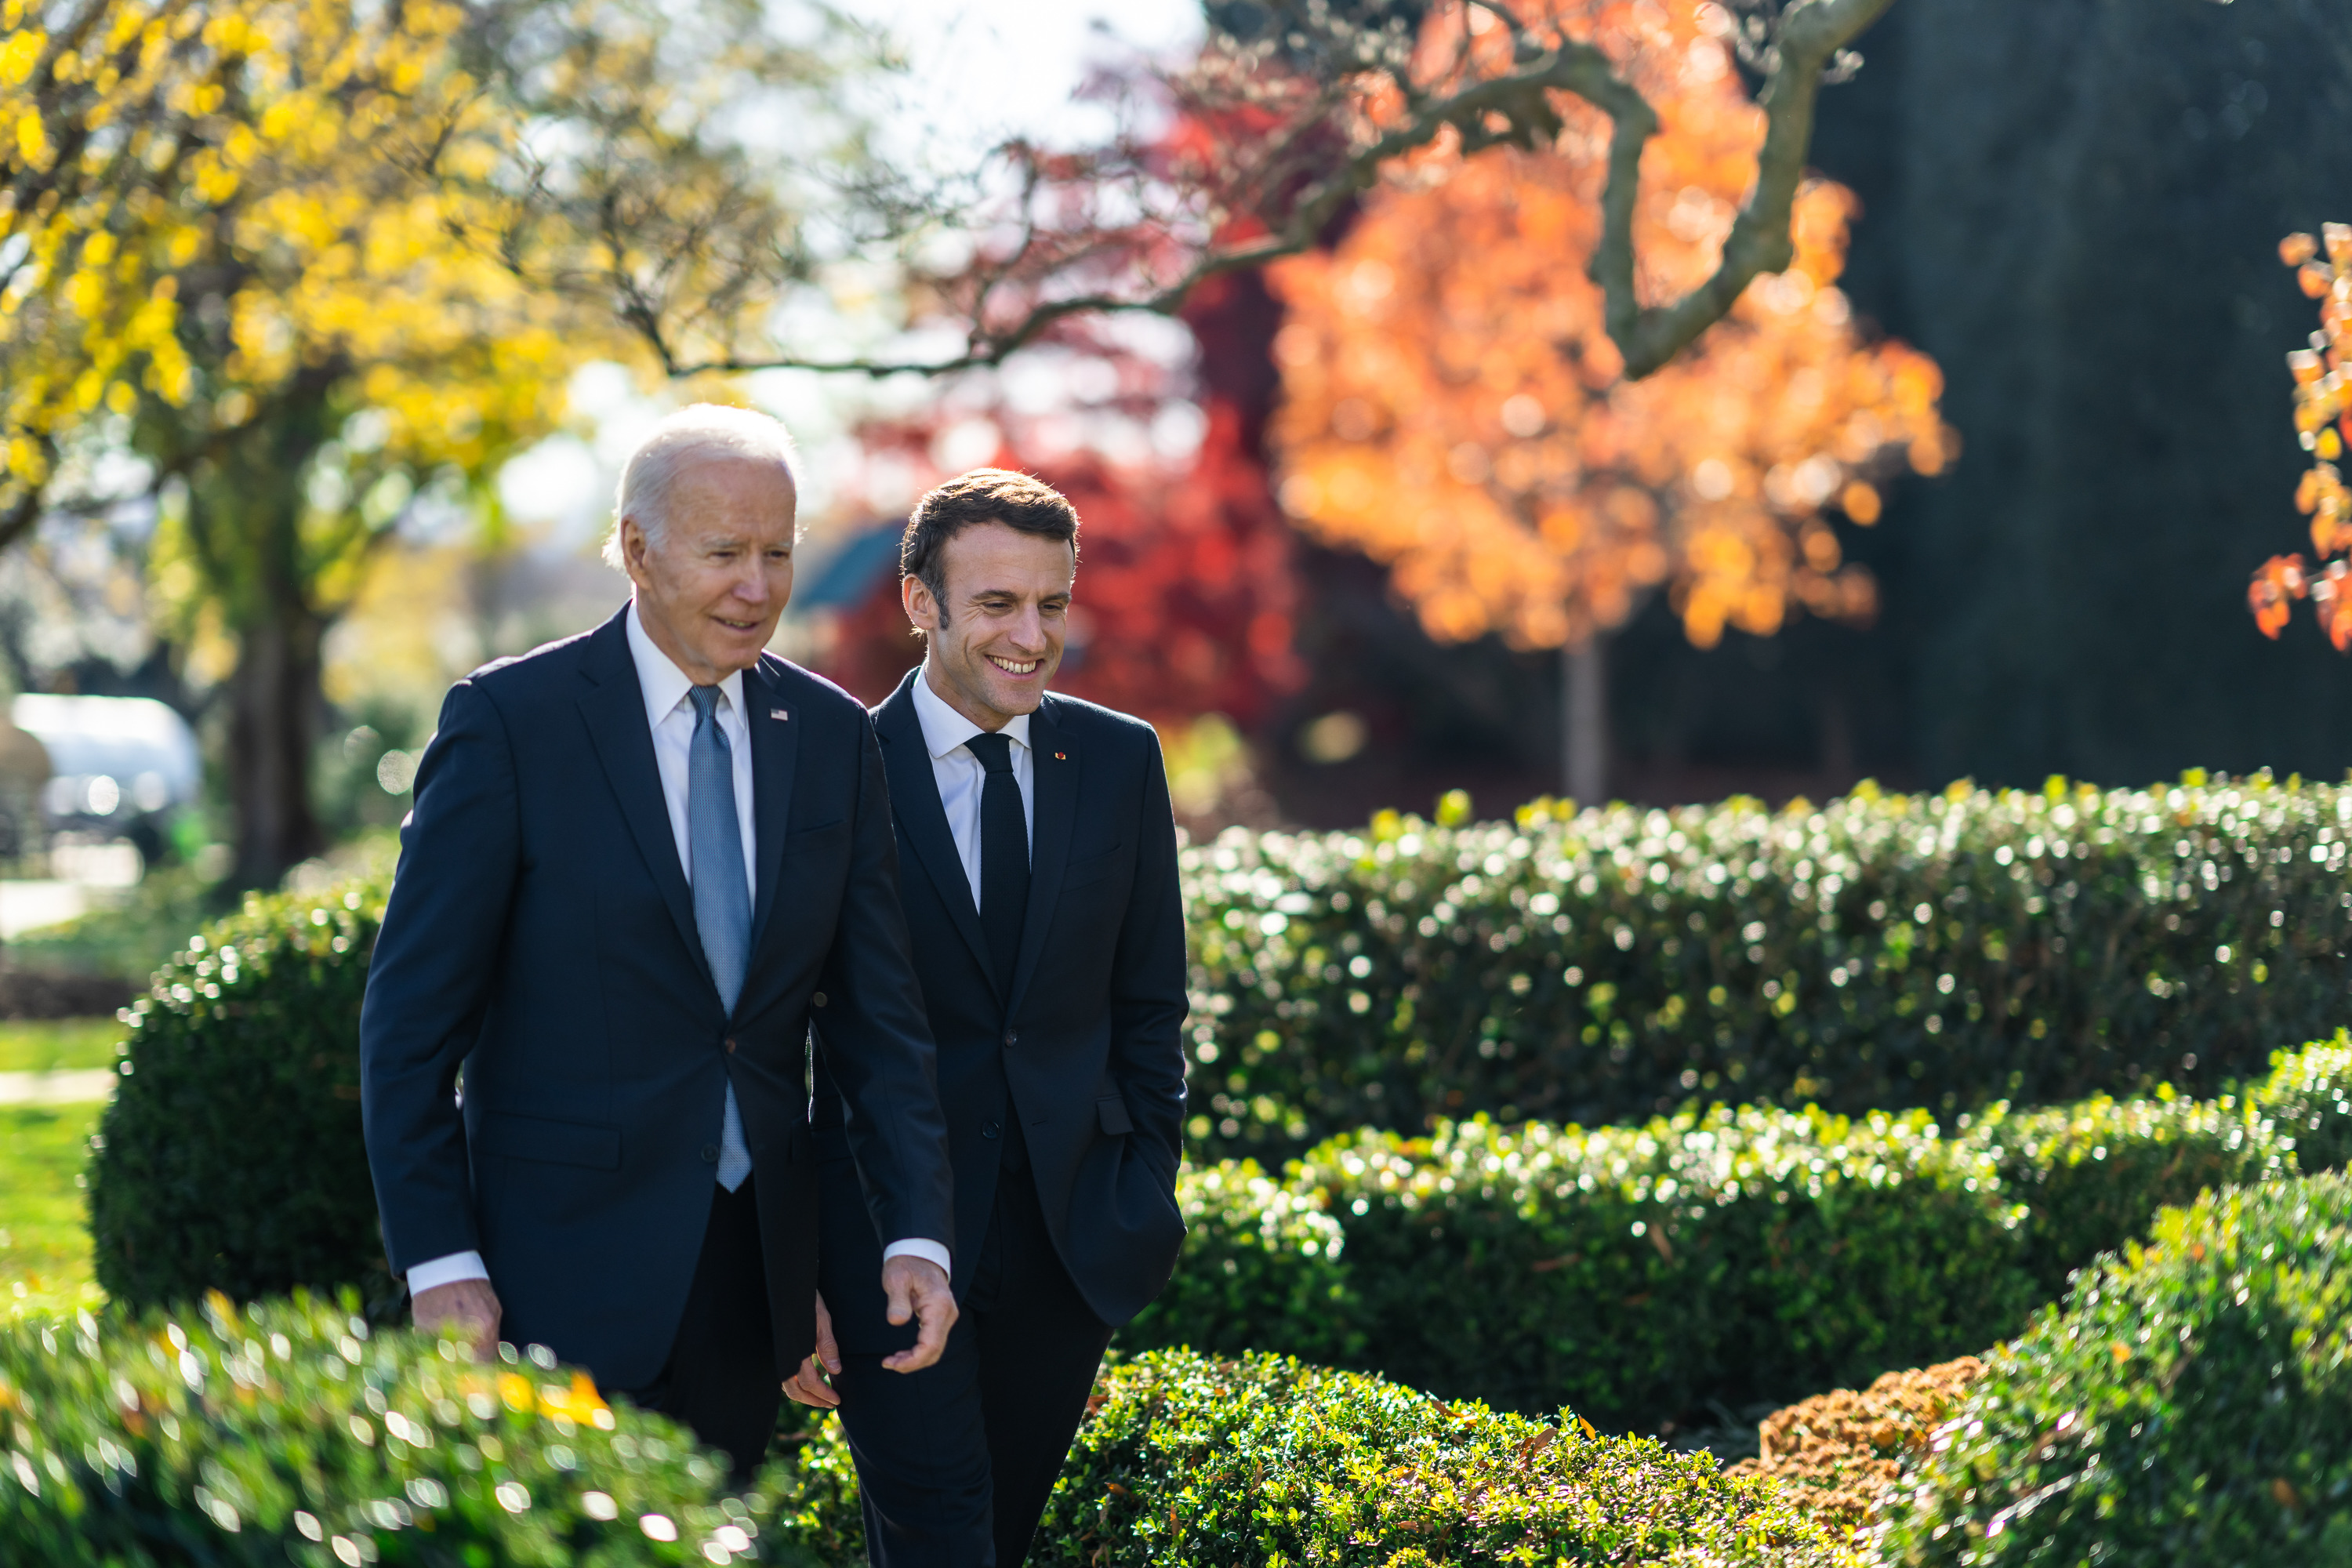 President Biden and President Macron walk outside.